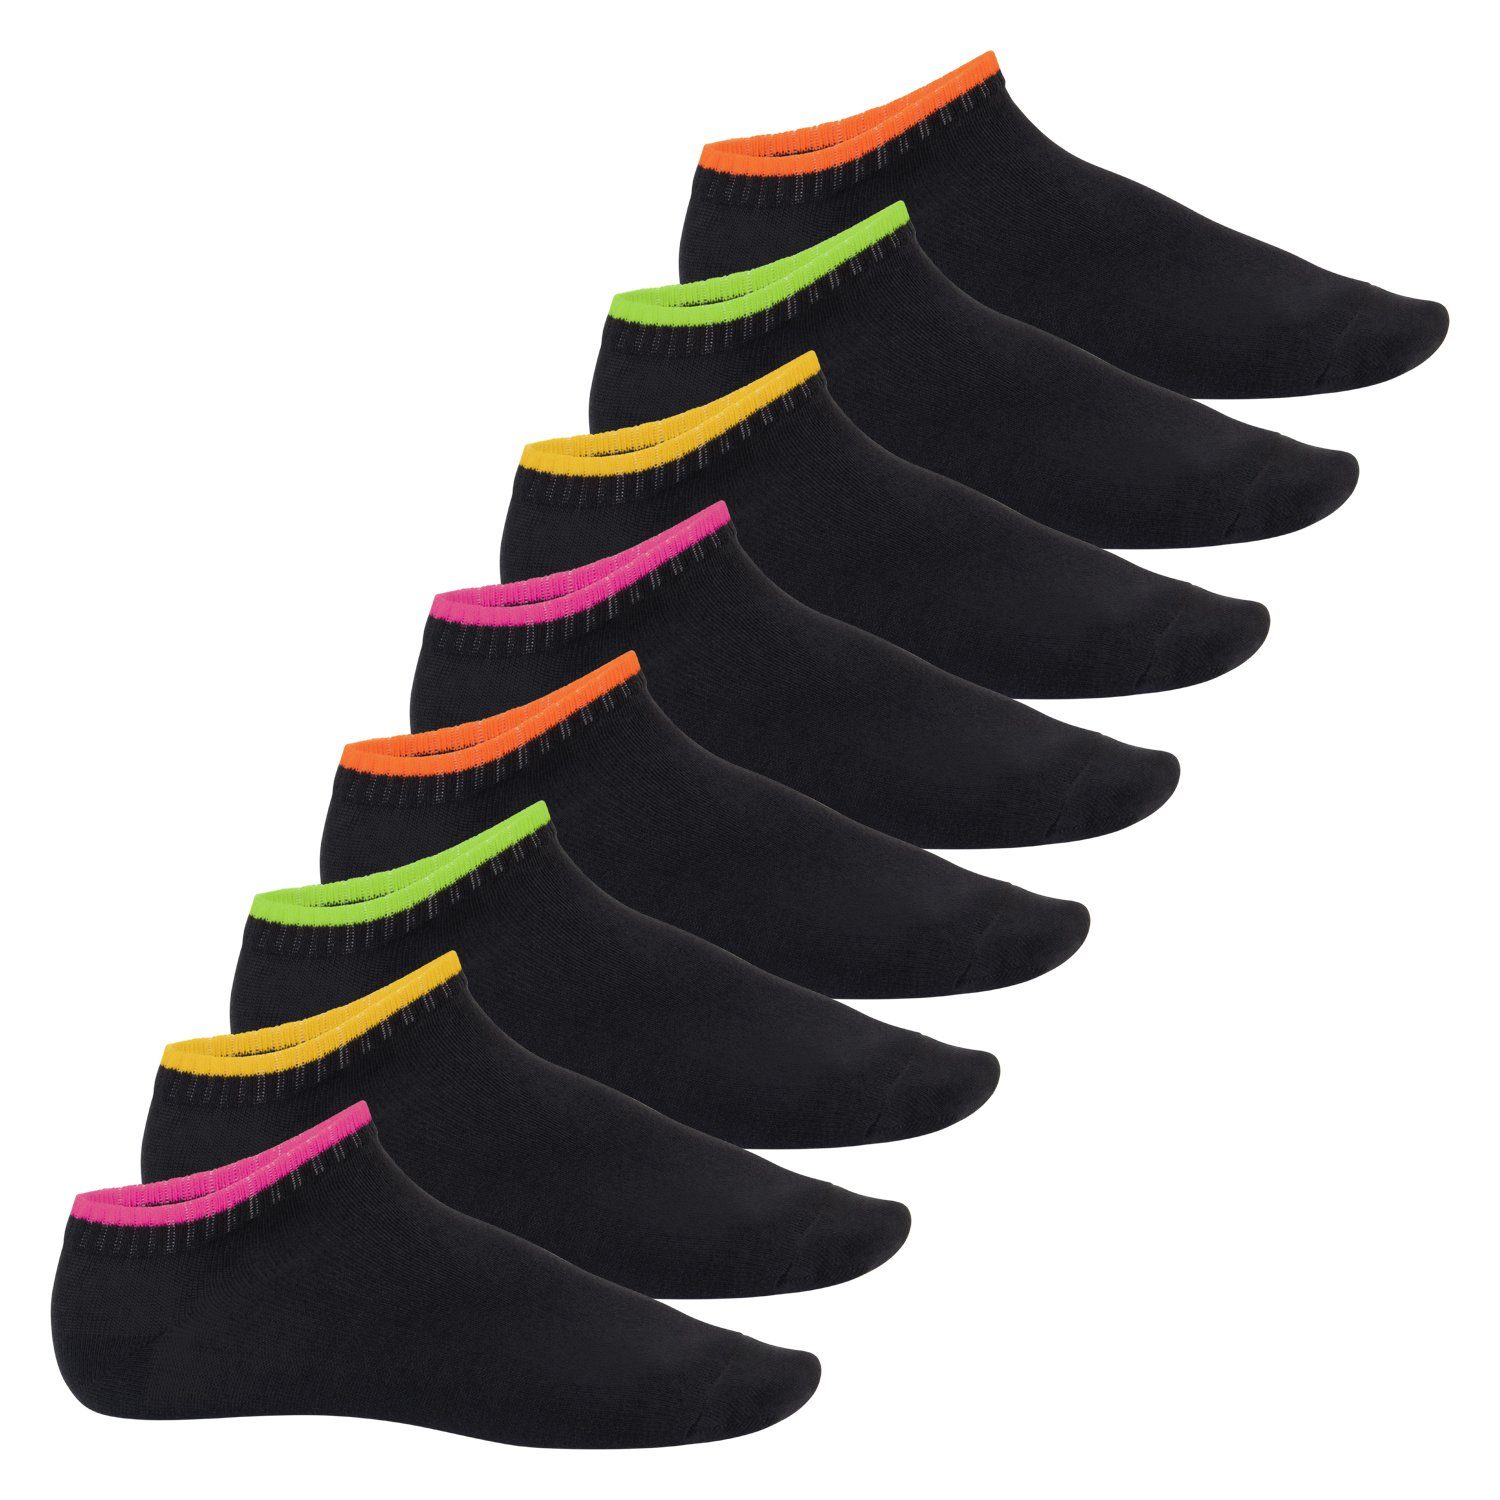 Footstar Füßlinge Damen & Herren Sneaker Socken (8 Paar), Neon Sportsocken Neon Flash - Schwarz